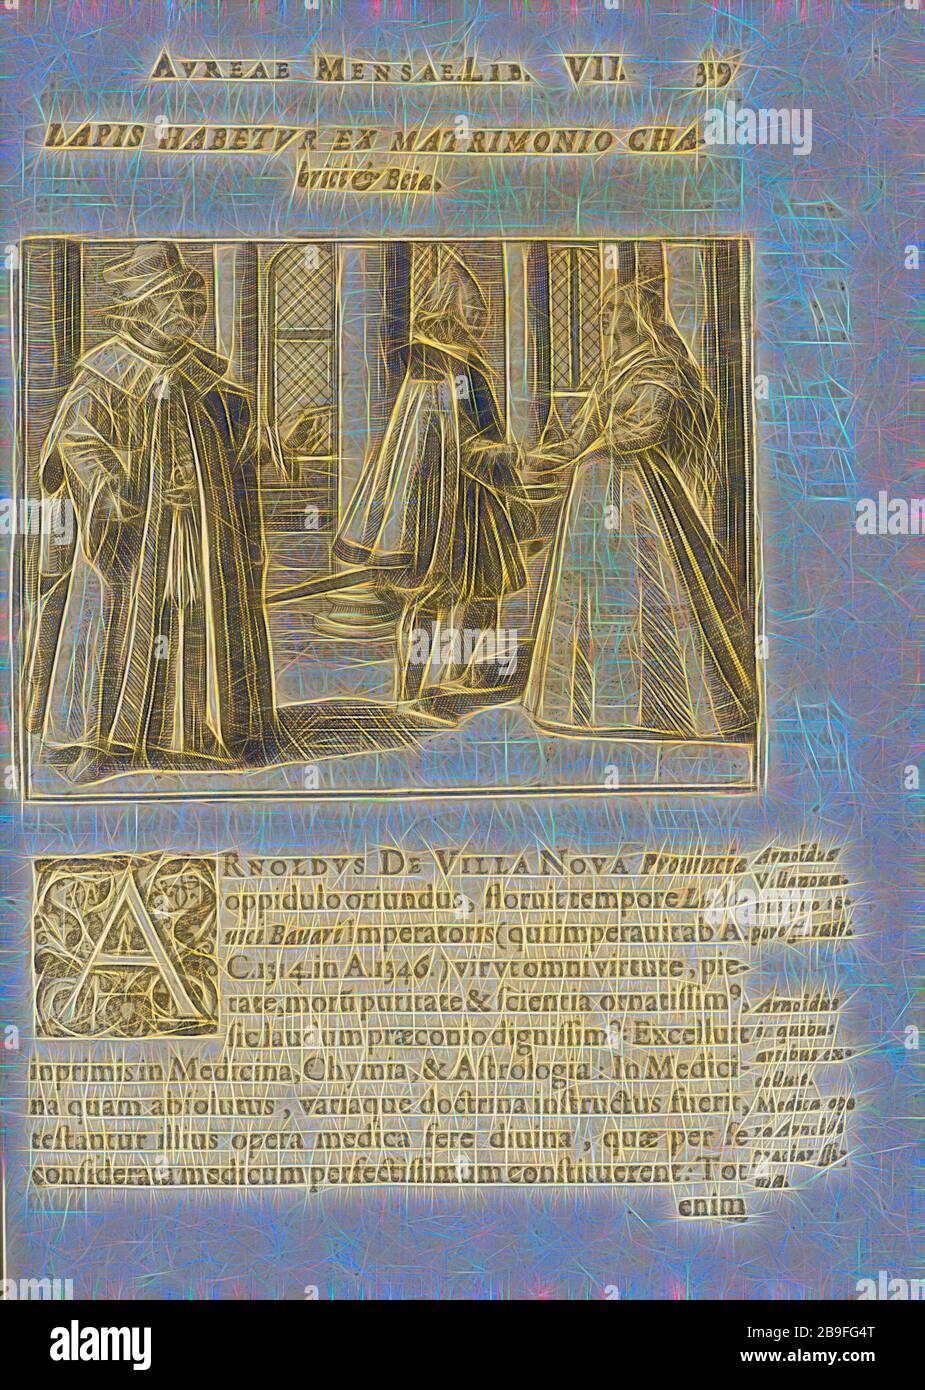 Lapis habetur ex matrimonio Chabrici and Beiae (with text), Symbola avreae mensae dvodecim nationvm, hoc est, Hermaea sev Mercvrii festa ab heroibus duodenu selectu, artis chymicae usu, sapientia and authoritate paribvs celebrata, ad Pyrgopolynicen seu aduersarium illum tot annis iactabundum, Maier, Michael, 1568?-1622, Engraving, letterpress, 1617, Reimagined by Gibon, design of warm cheerful glowing of brightness and light rays radiance. Classic art reinvented with a modern twist. Photography inspired by futurism, embracing dynamic energy of modern technology, movement, speed and revolutioni Stock Photo